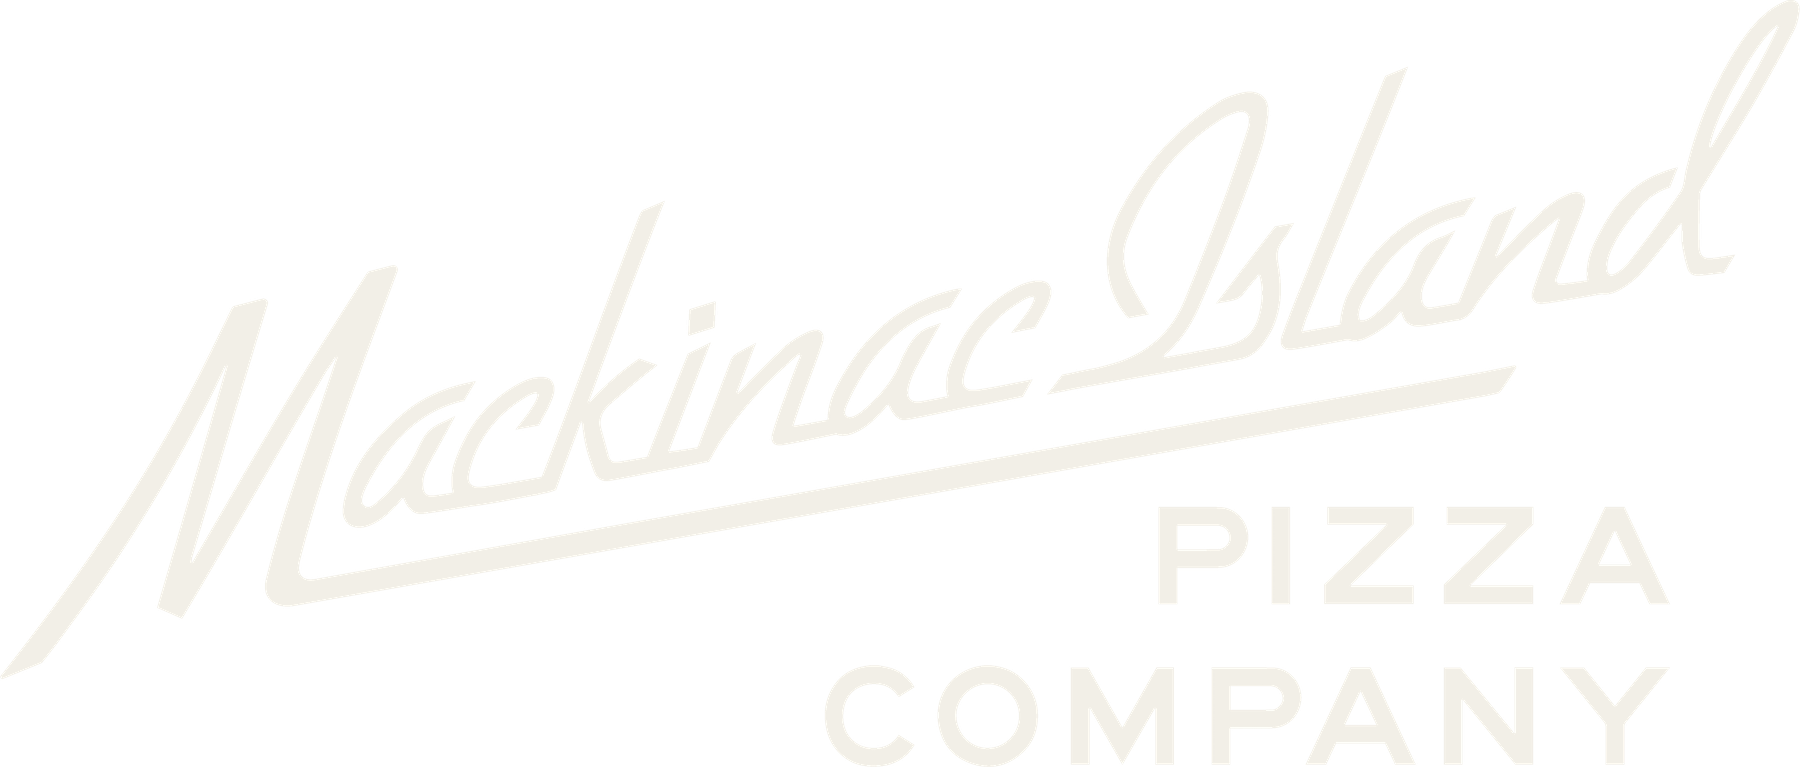 Mackinac Island Pizza Company Home